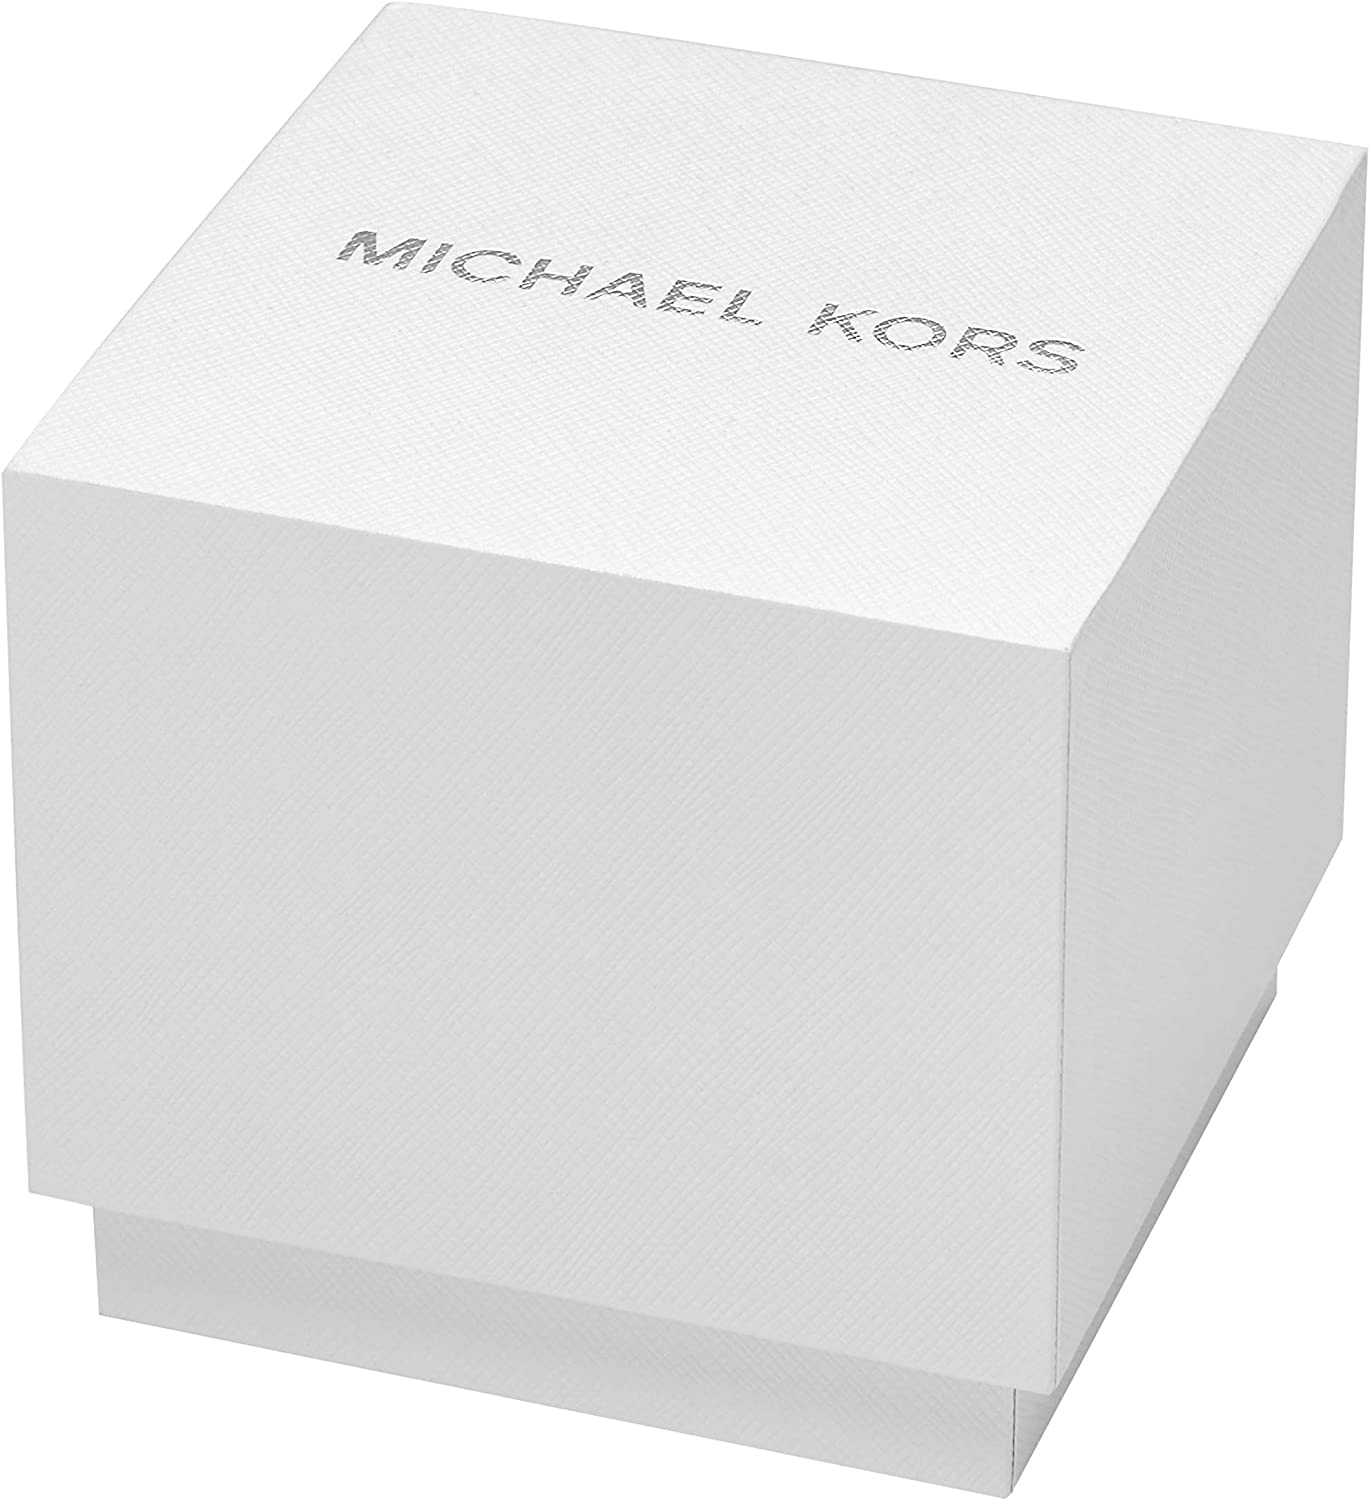 Michael Kors Jaryn Analog Gold Dial Women's Watch - MK3785